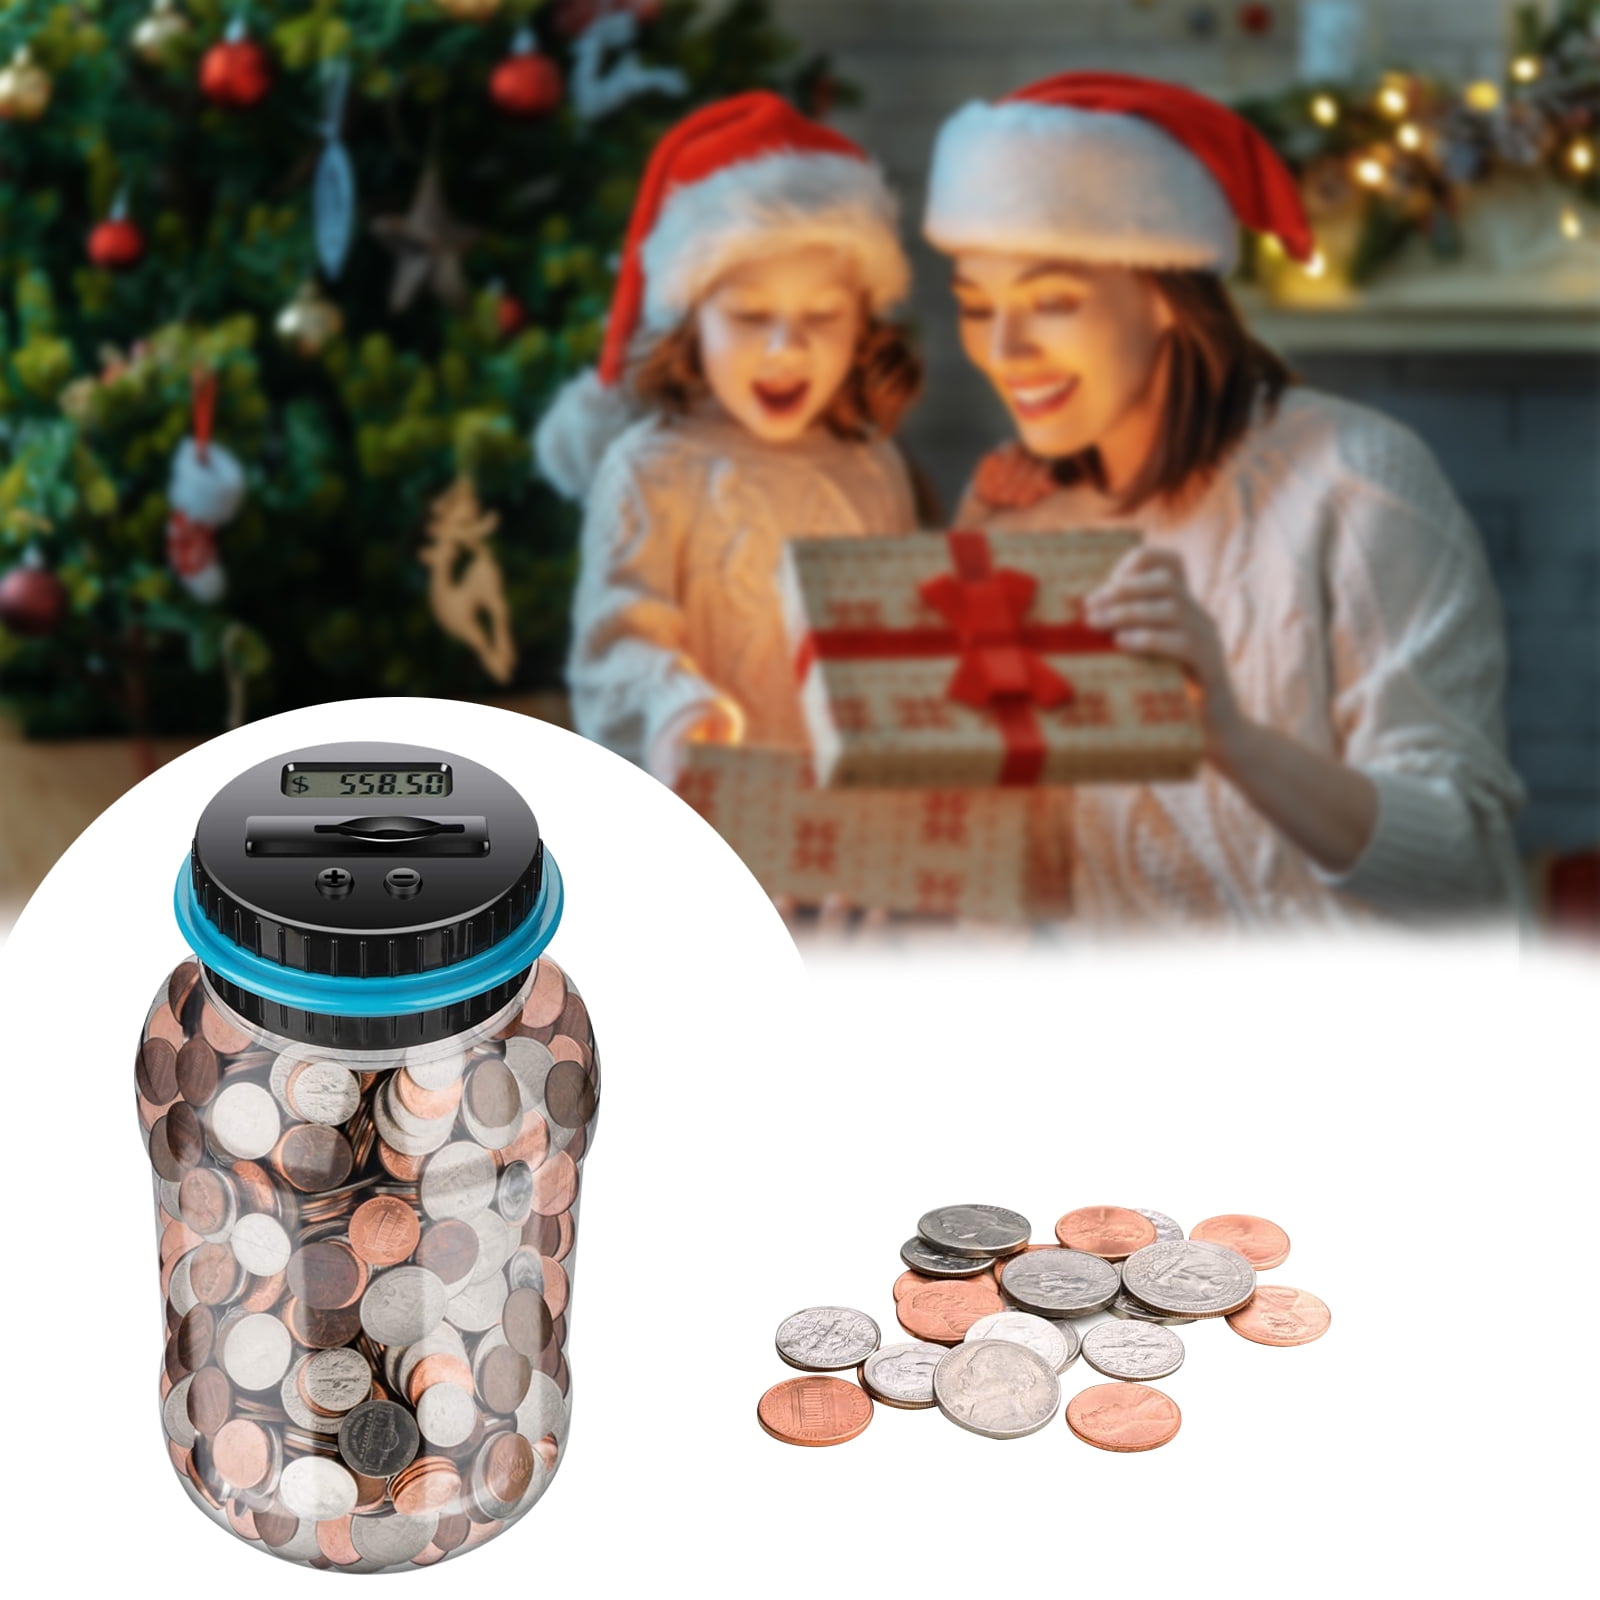 Digital Coin Counting Money Jar Change Xmas Birthday Gift For kids children 